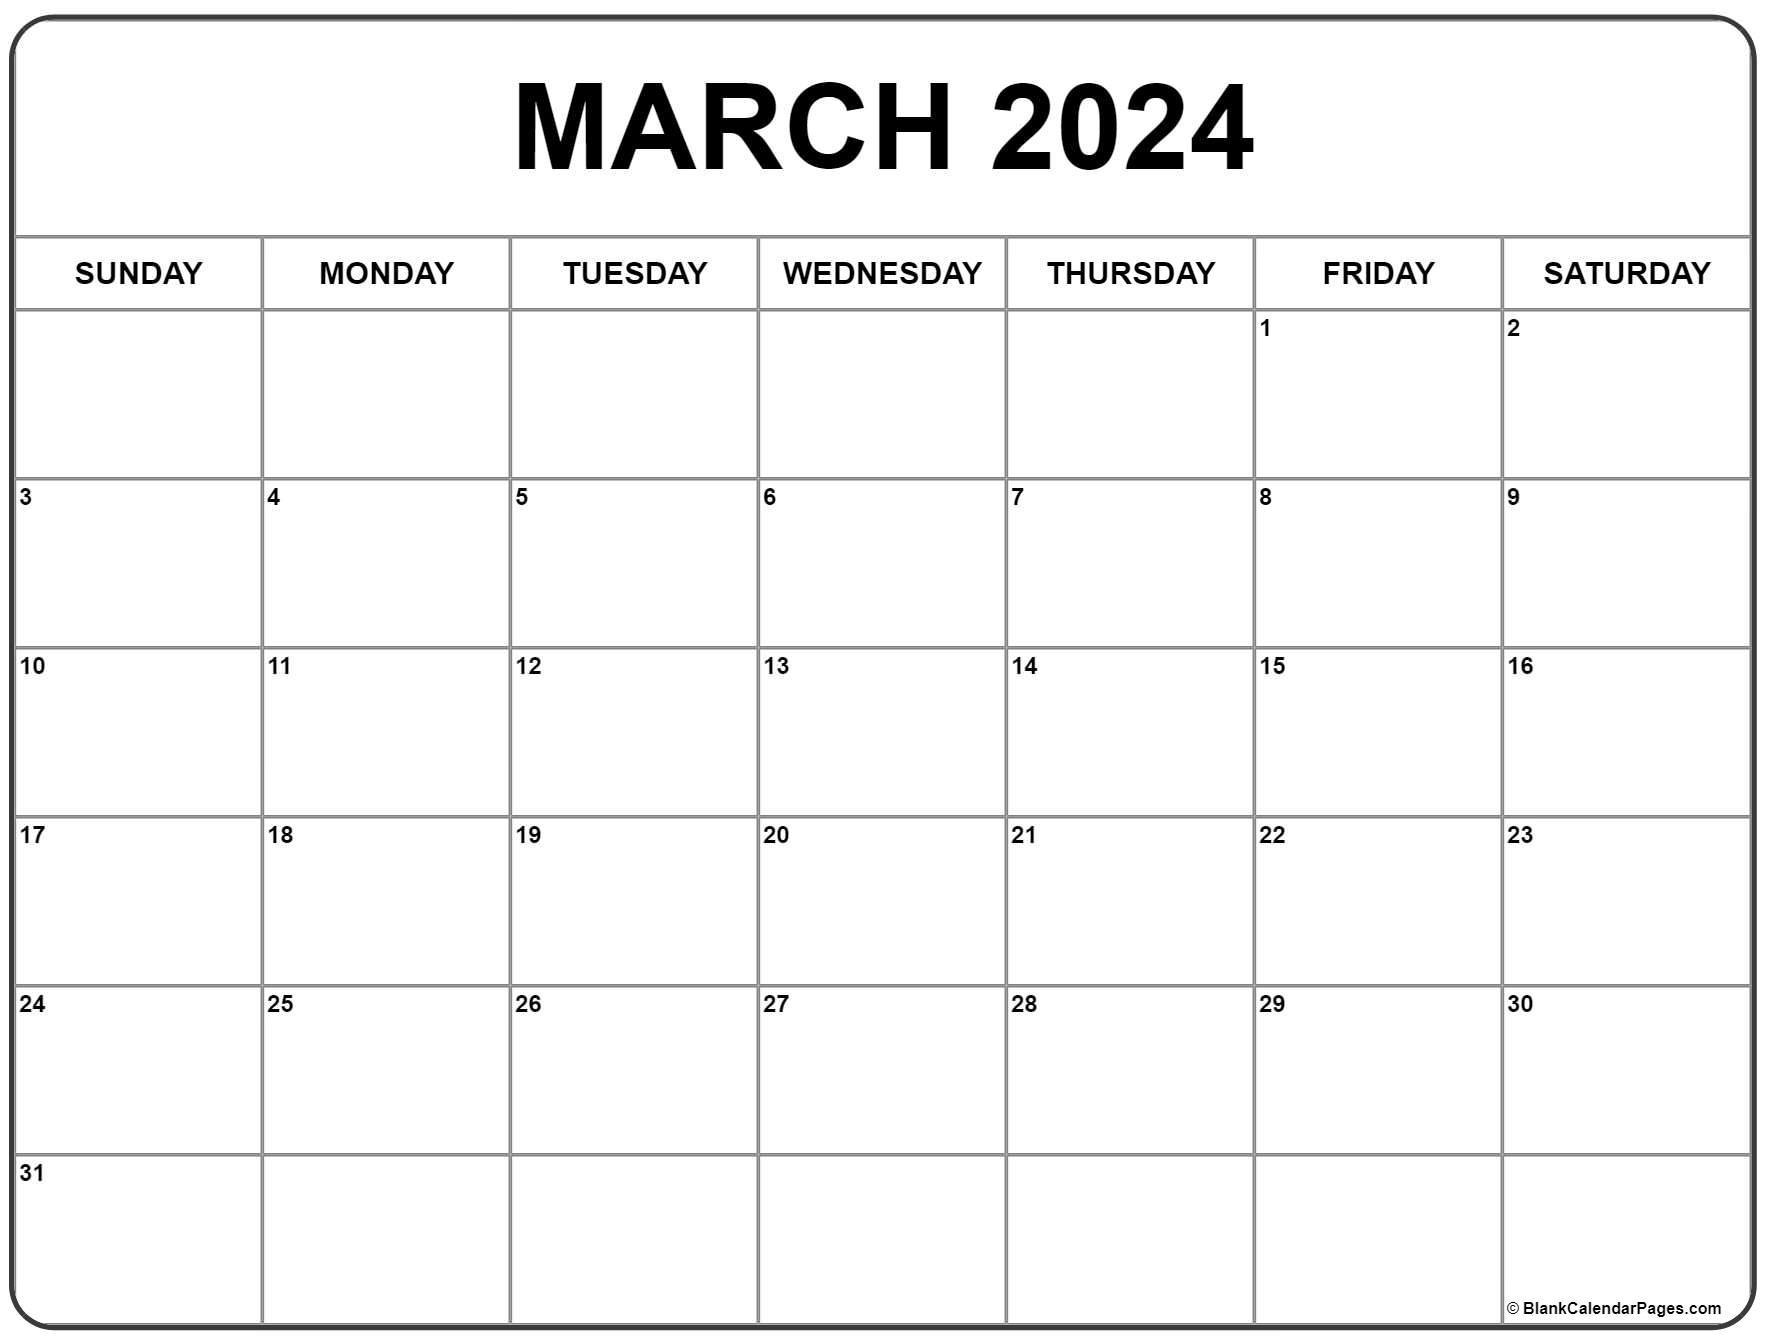 March 2024 Calendar | Free Printable Calendar for Free March Printable Calendar 2024